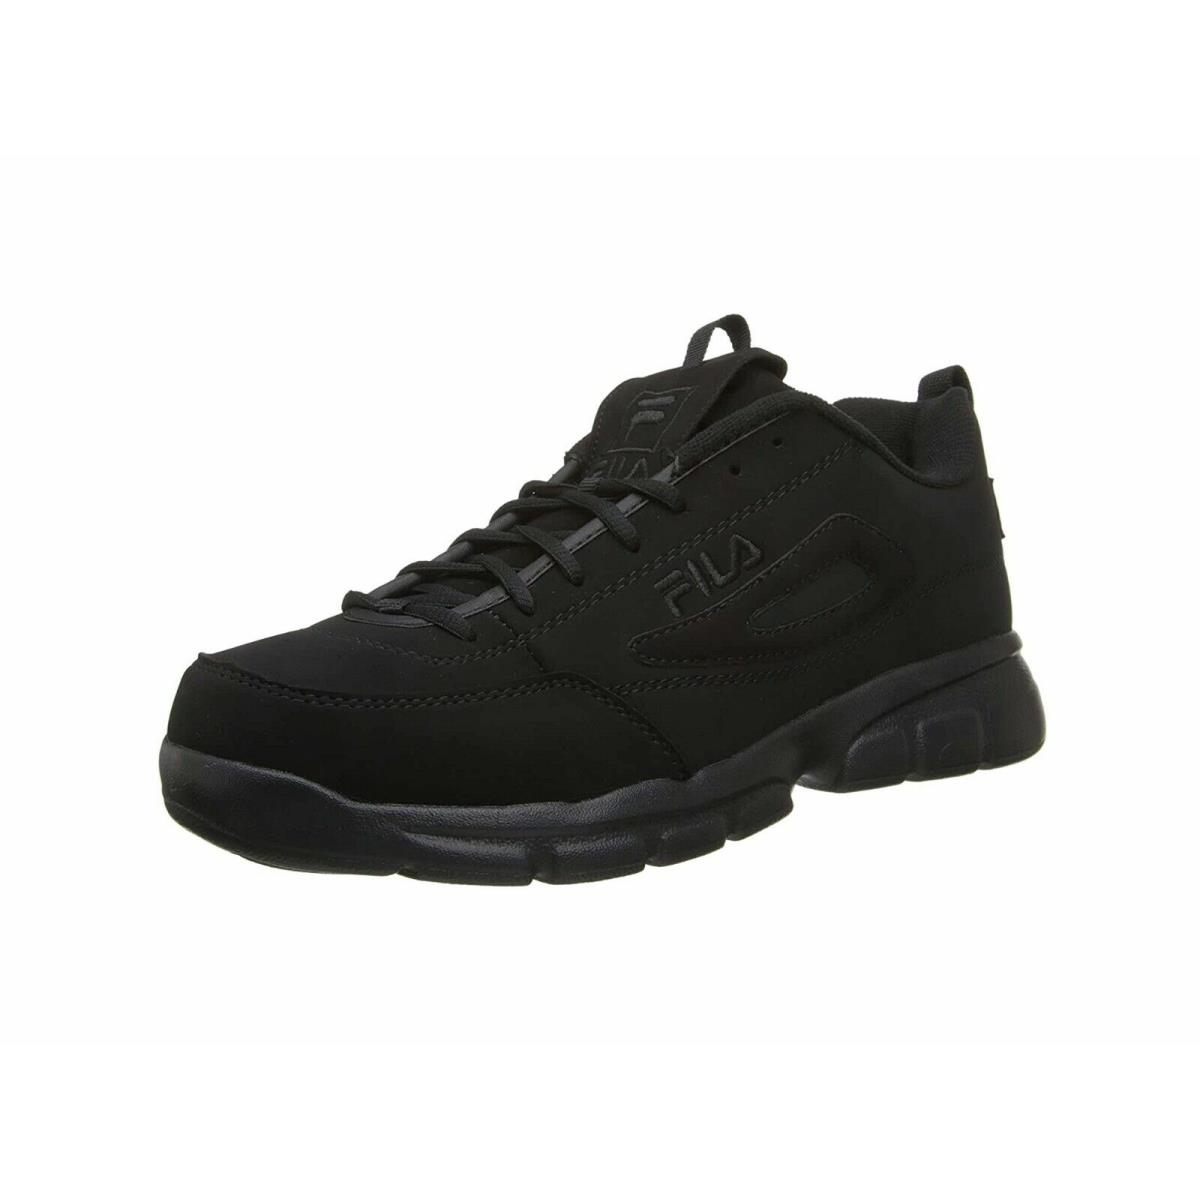 Fila Disruptor SE Men Shoes Sneakers Nubuck Black Black